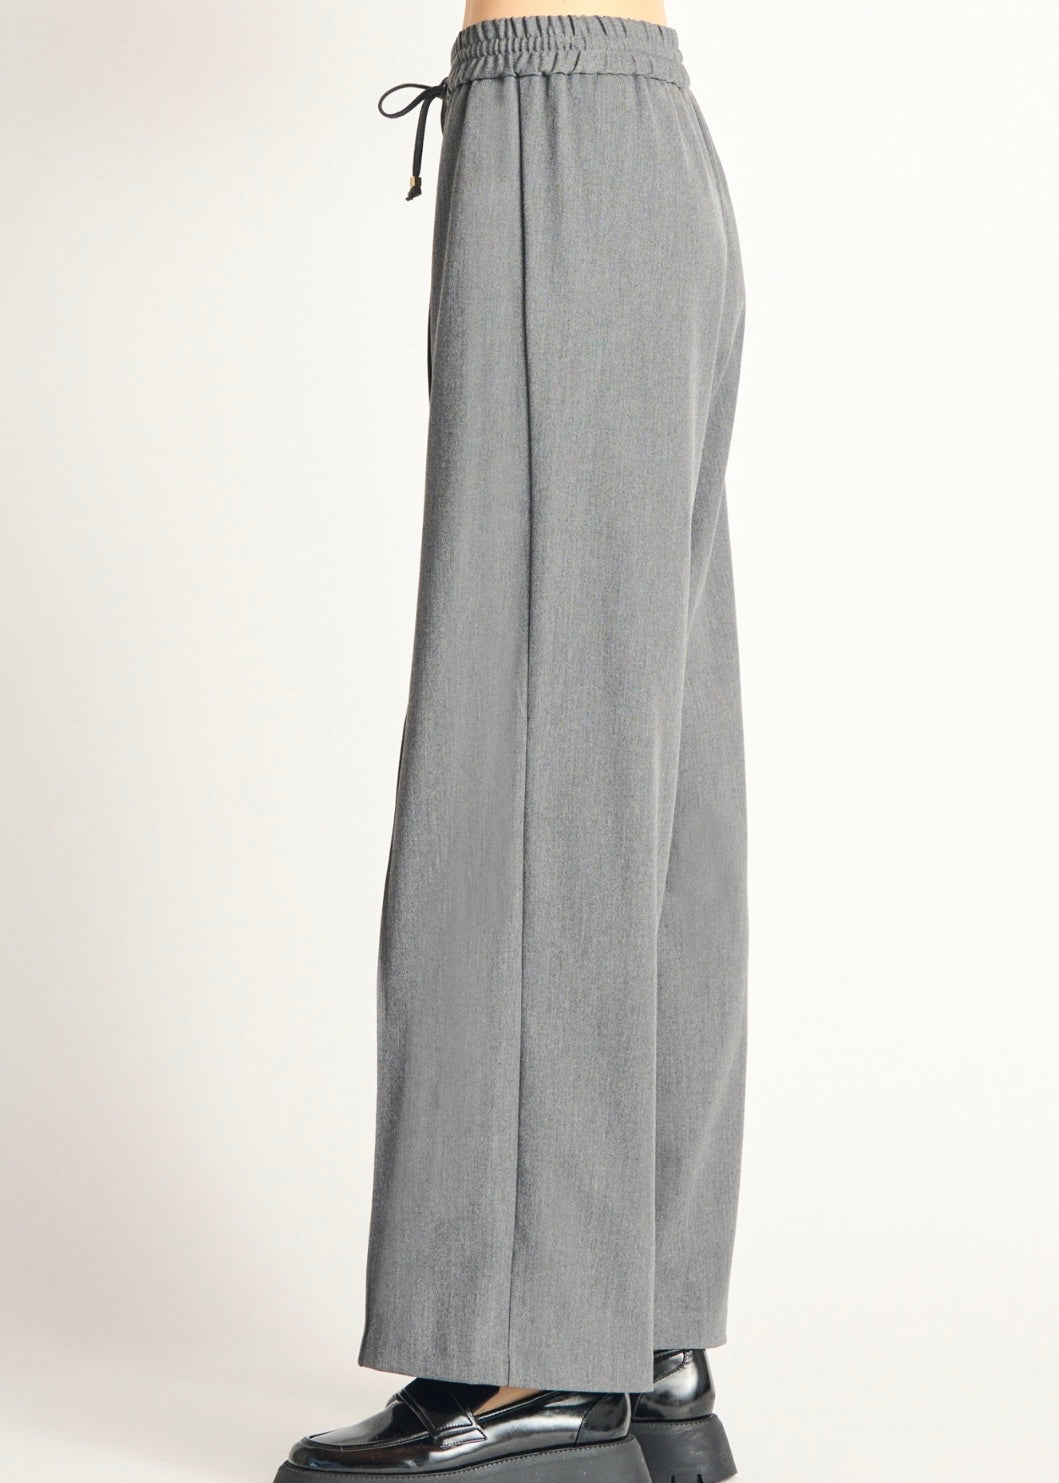 Sandy Elastic Waist Trouser in Grey Mix